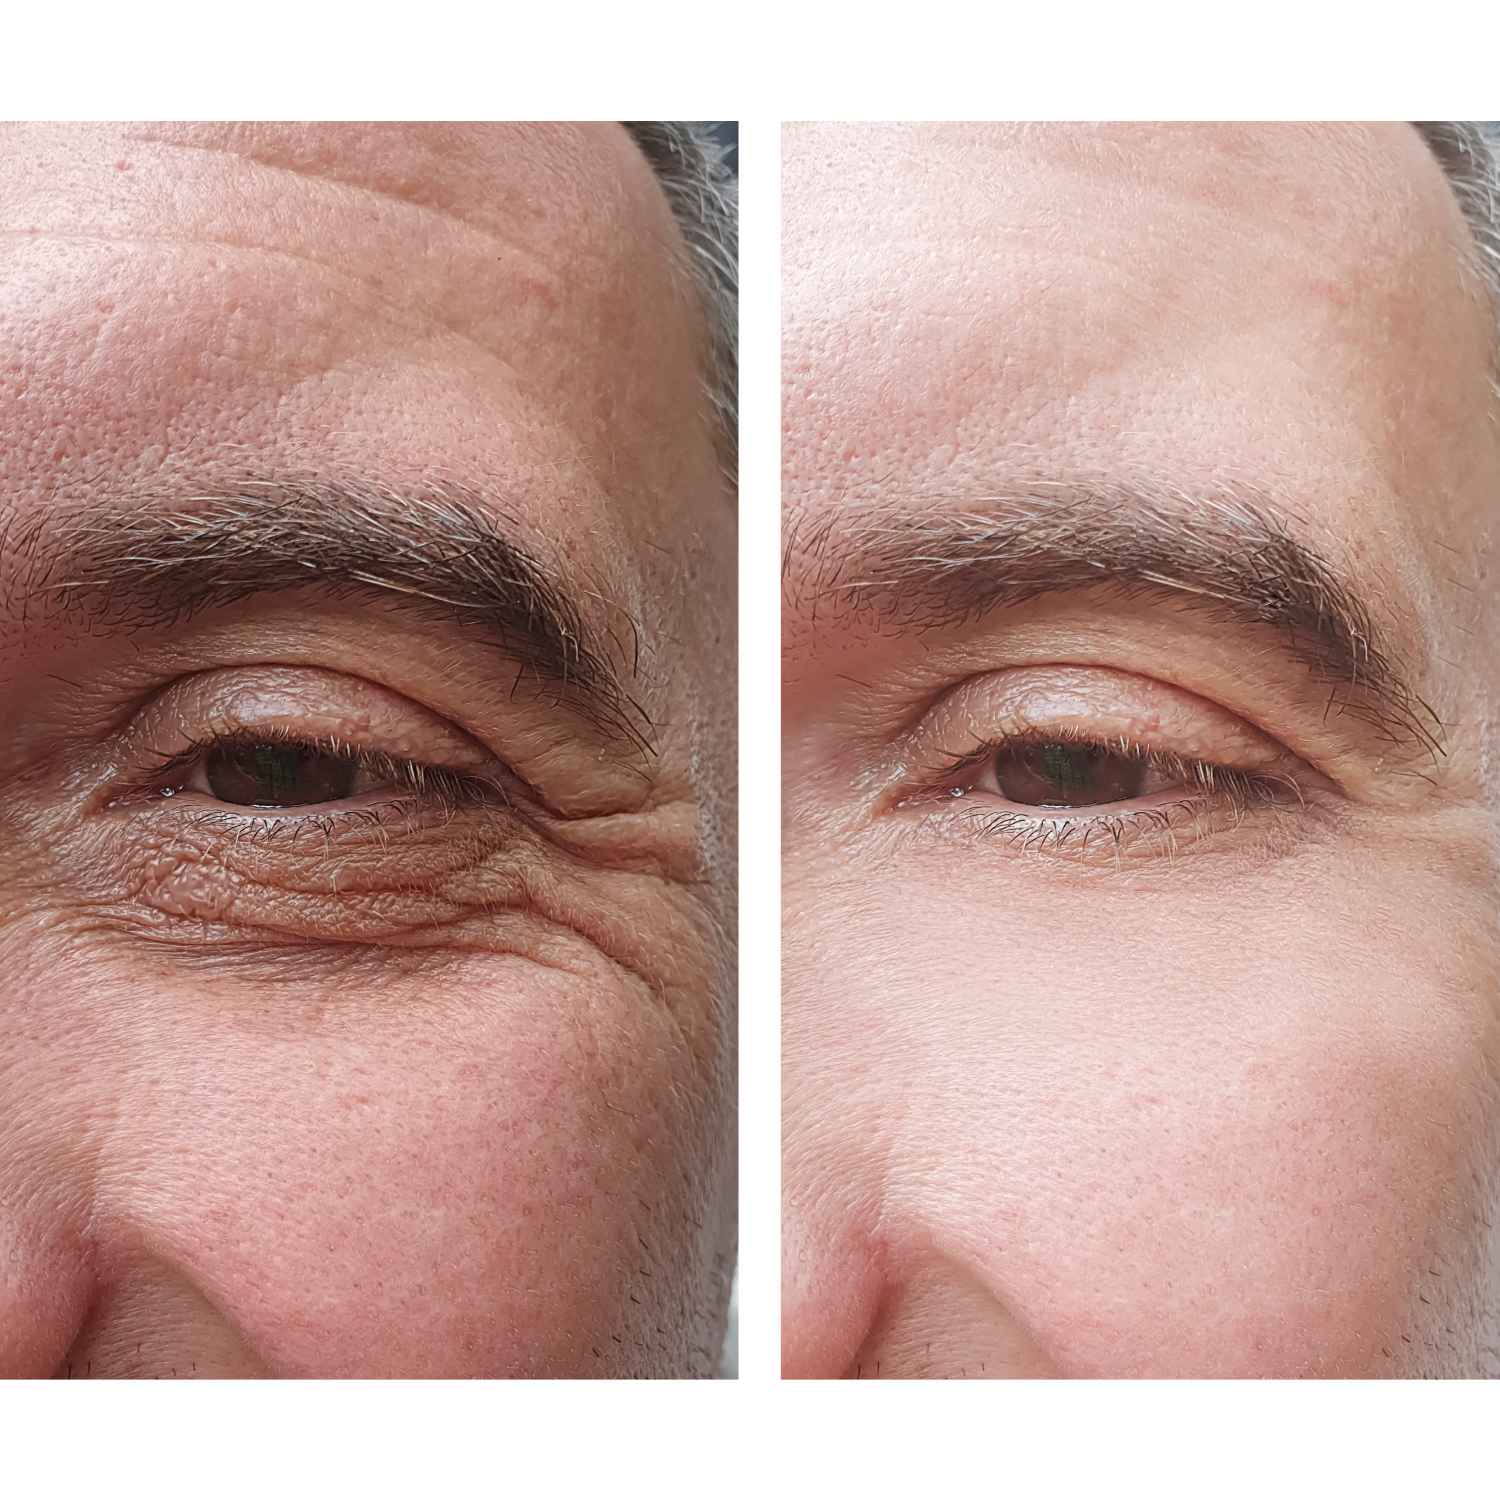 Botox for men after and before Flawless Skin MedSpa Newyork